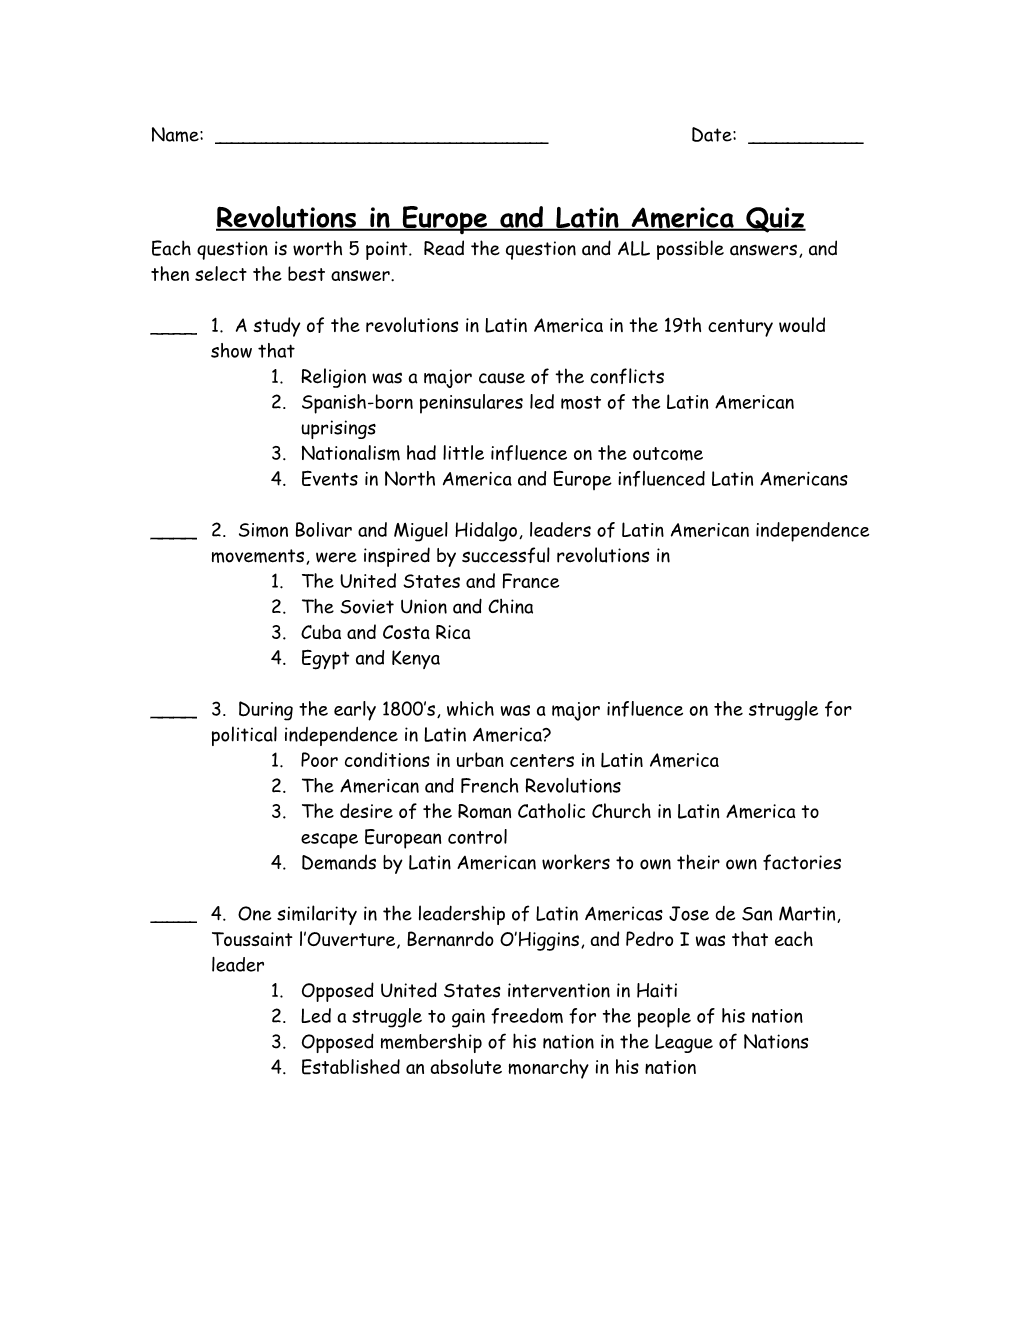 Revolutions in Europe and Latin America Quiz